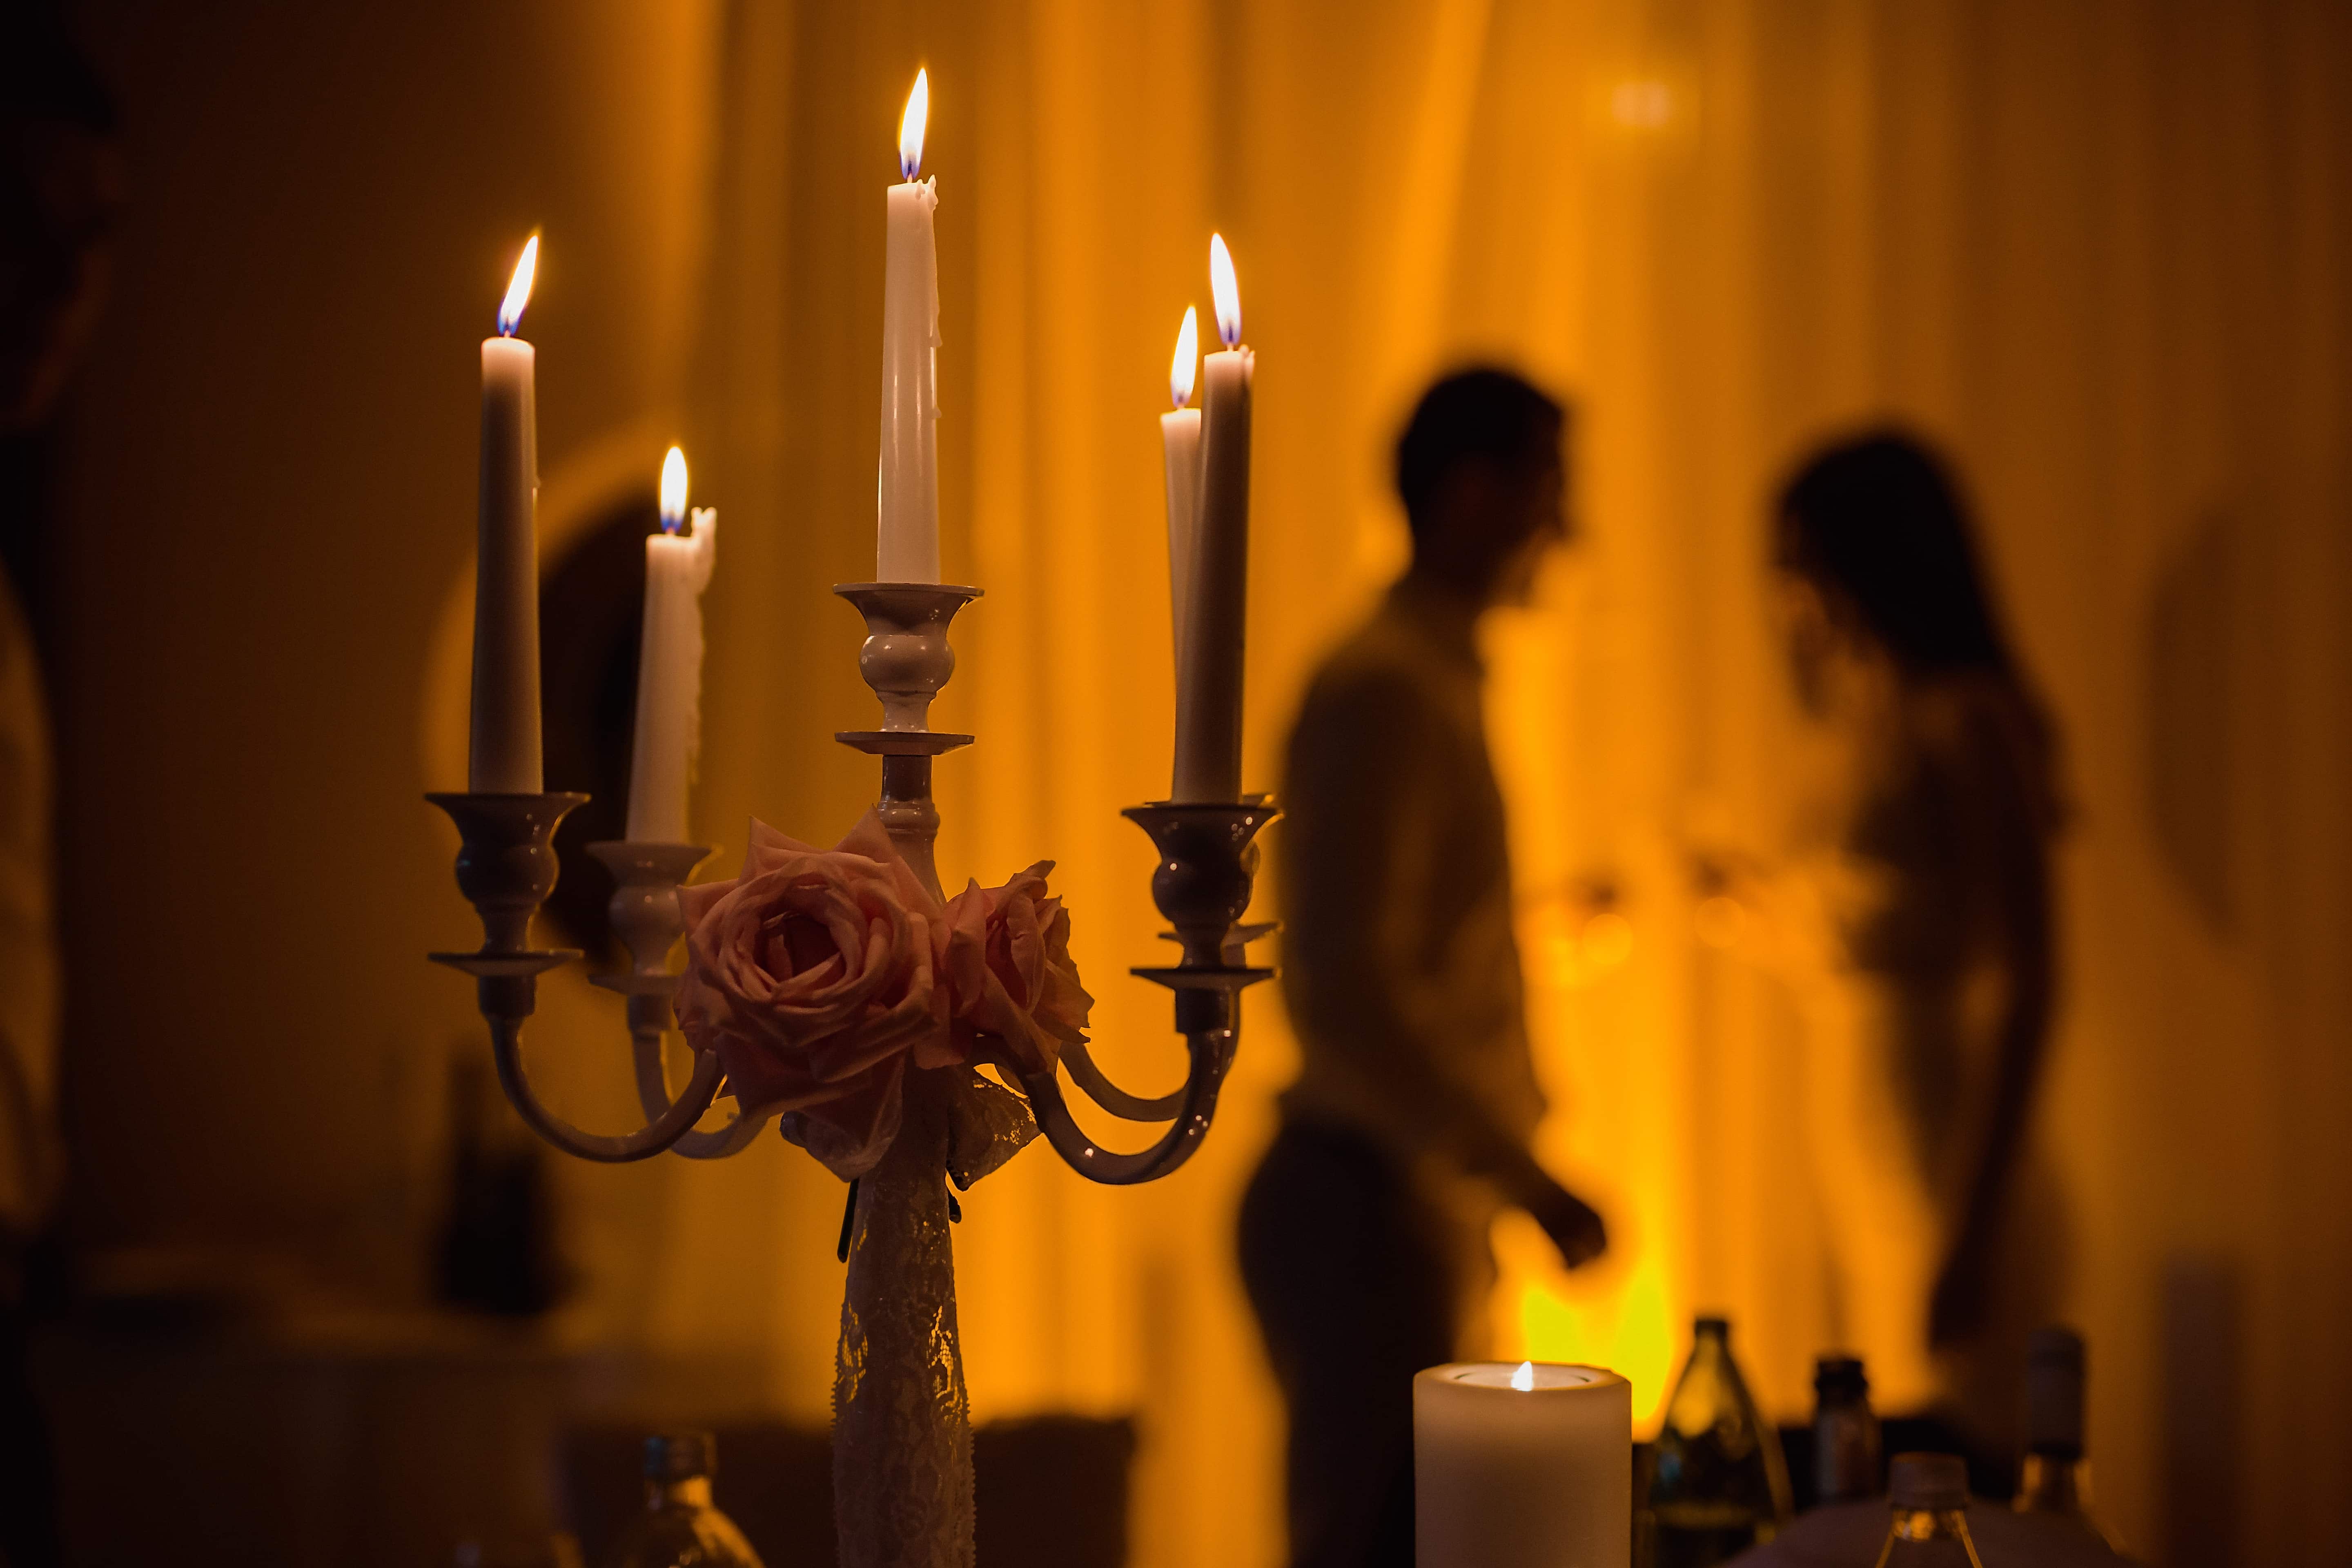 Imagen gratis: cita de amor, vela, candelero, luz de las velas